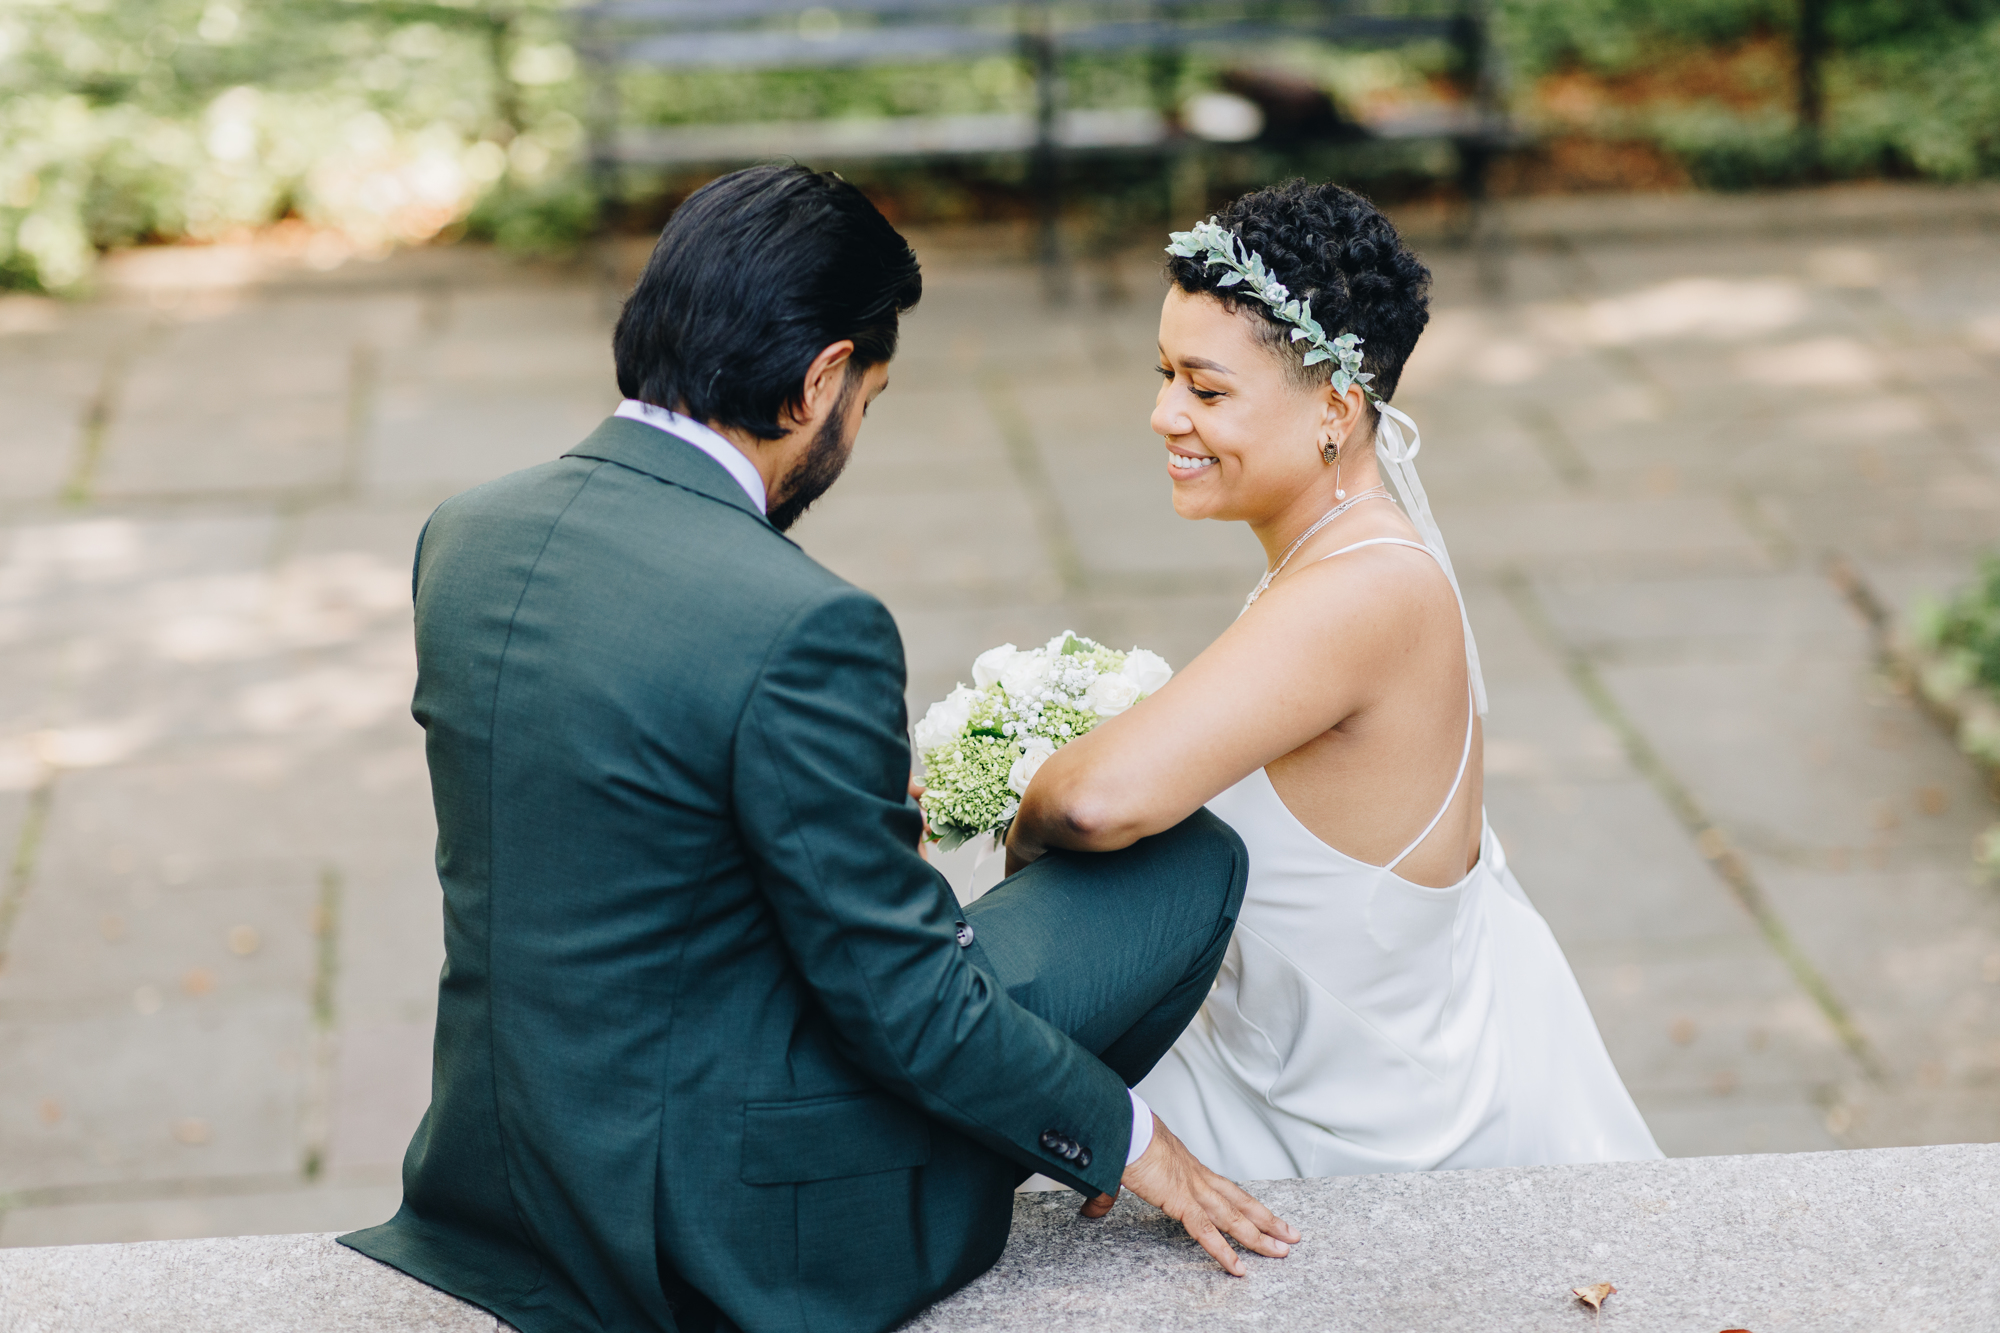 Affordable NYC wedding photographer and videographer